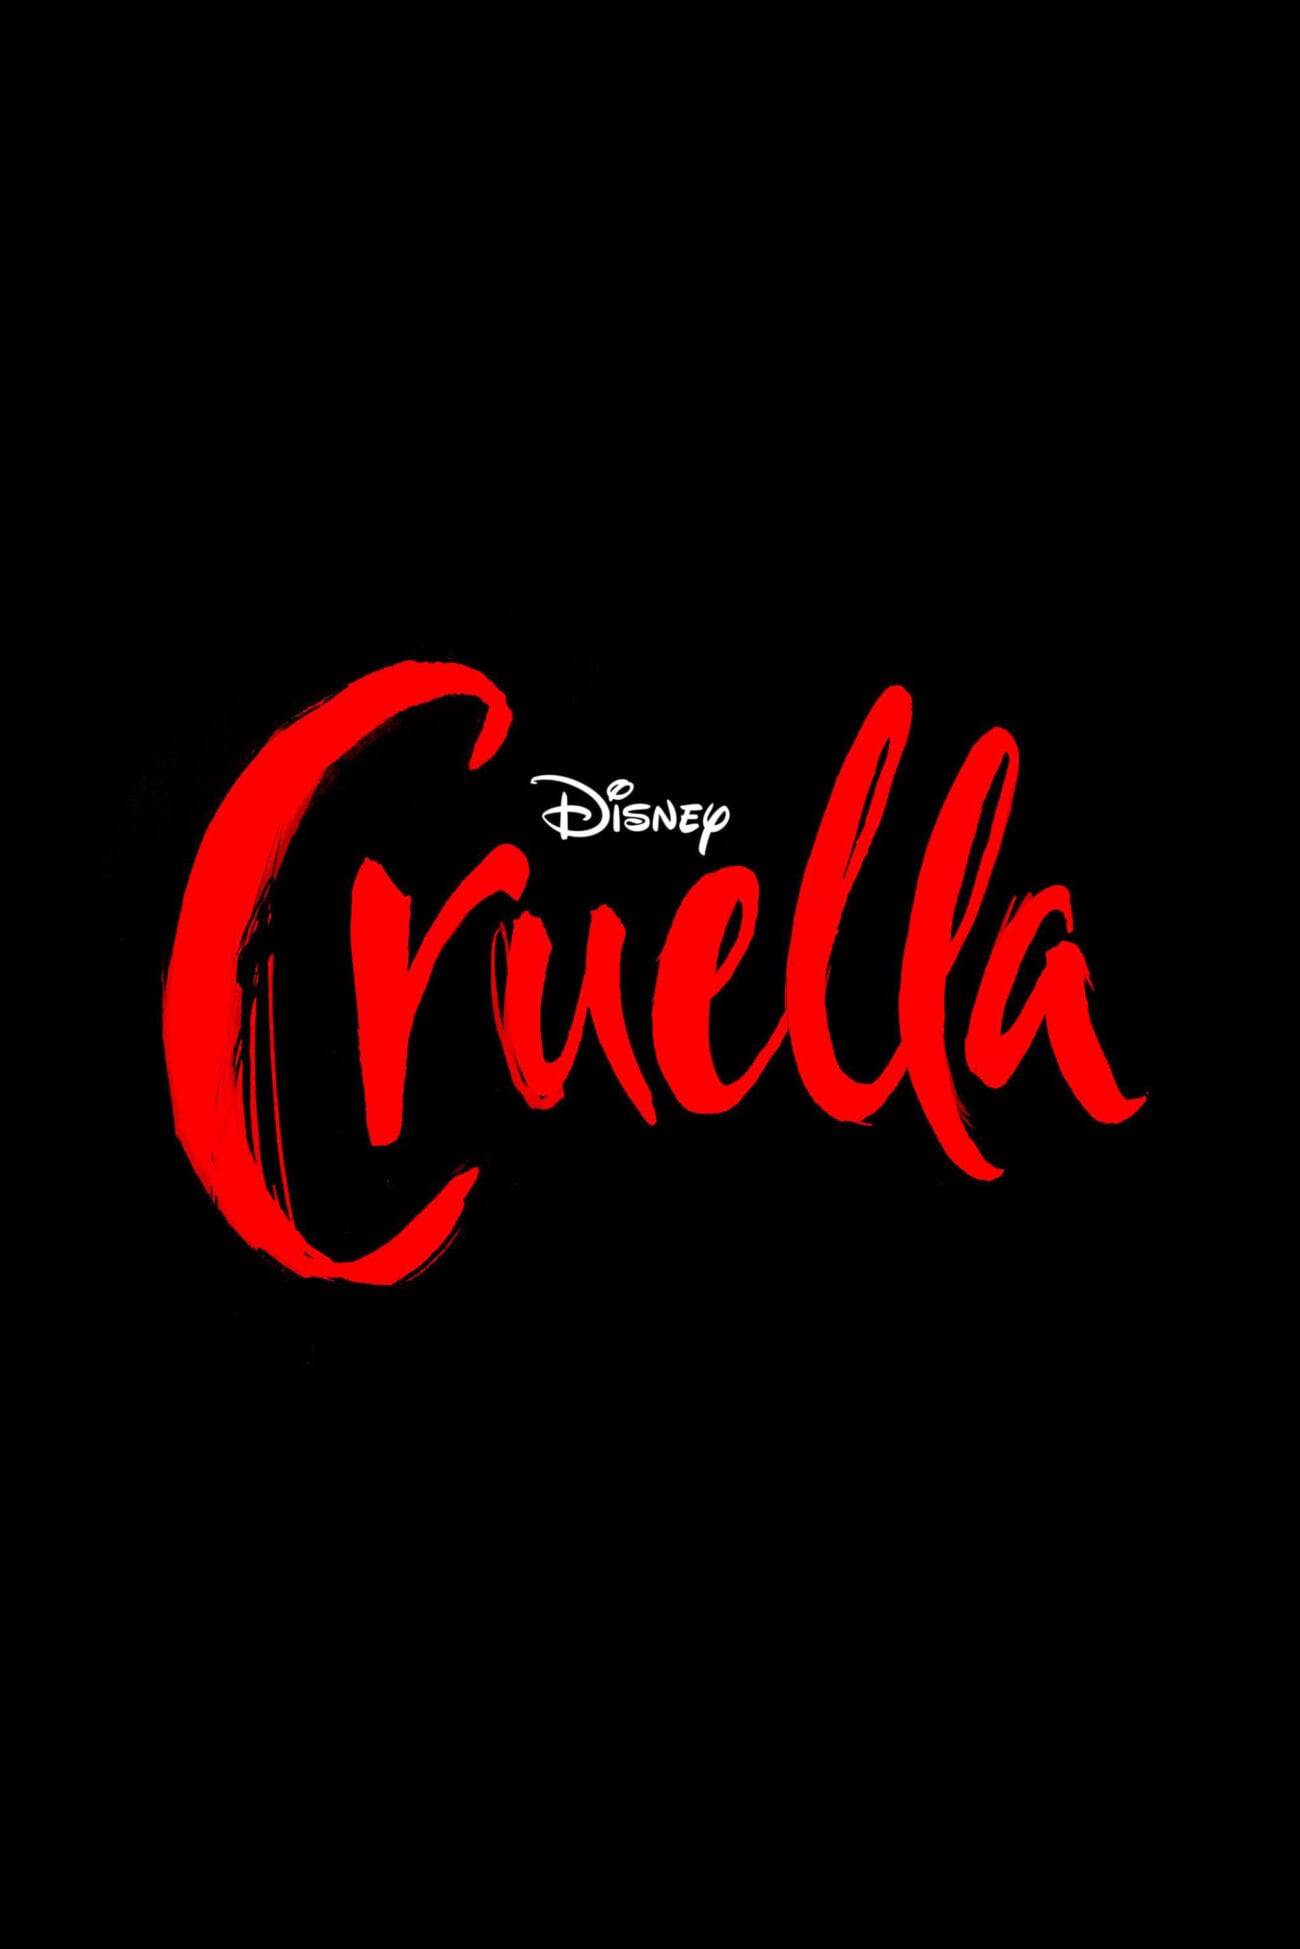 Disney's Cruella has released a new image, and it's spot on! Will Emma Stone kill it as Cruella de Vil? Tomorrow's trailer should tell us everything.